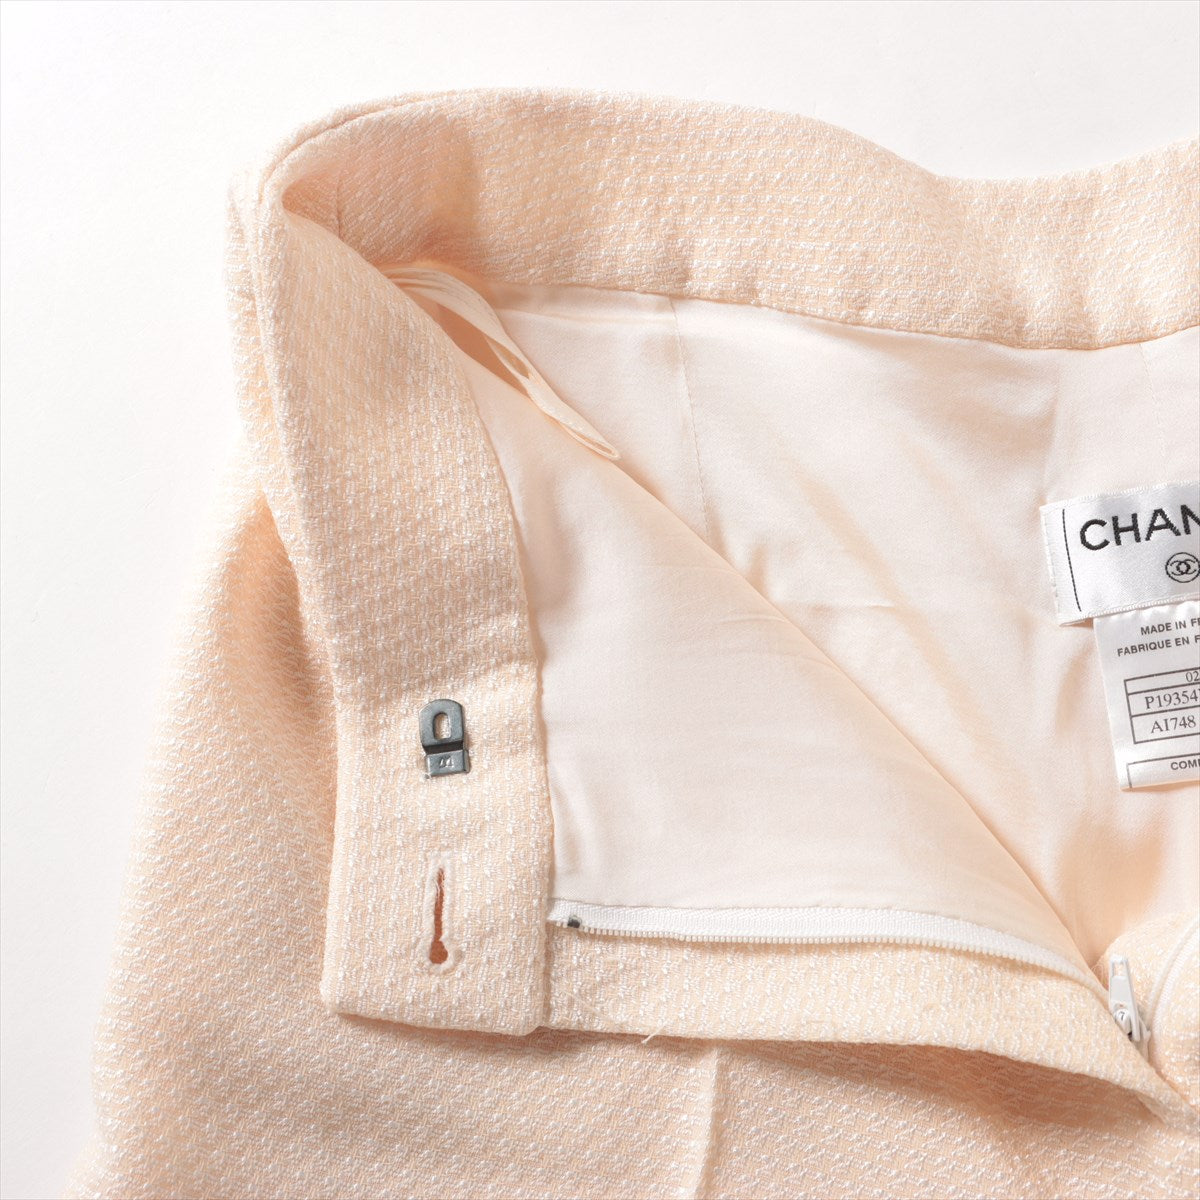 Chanel Coco 02P Wool Pants 40  Beige P19354V11291